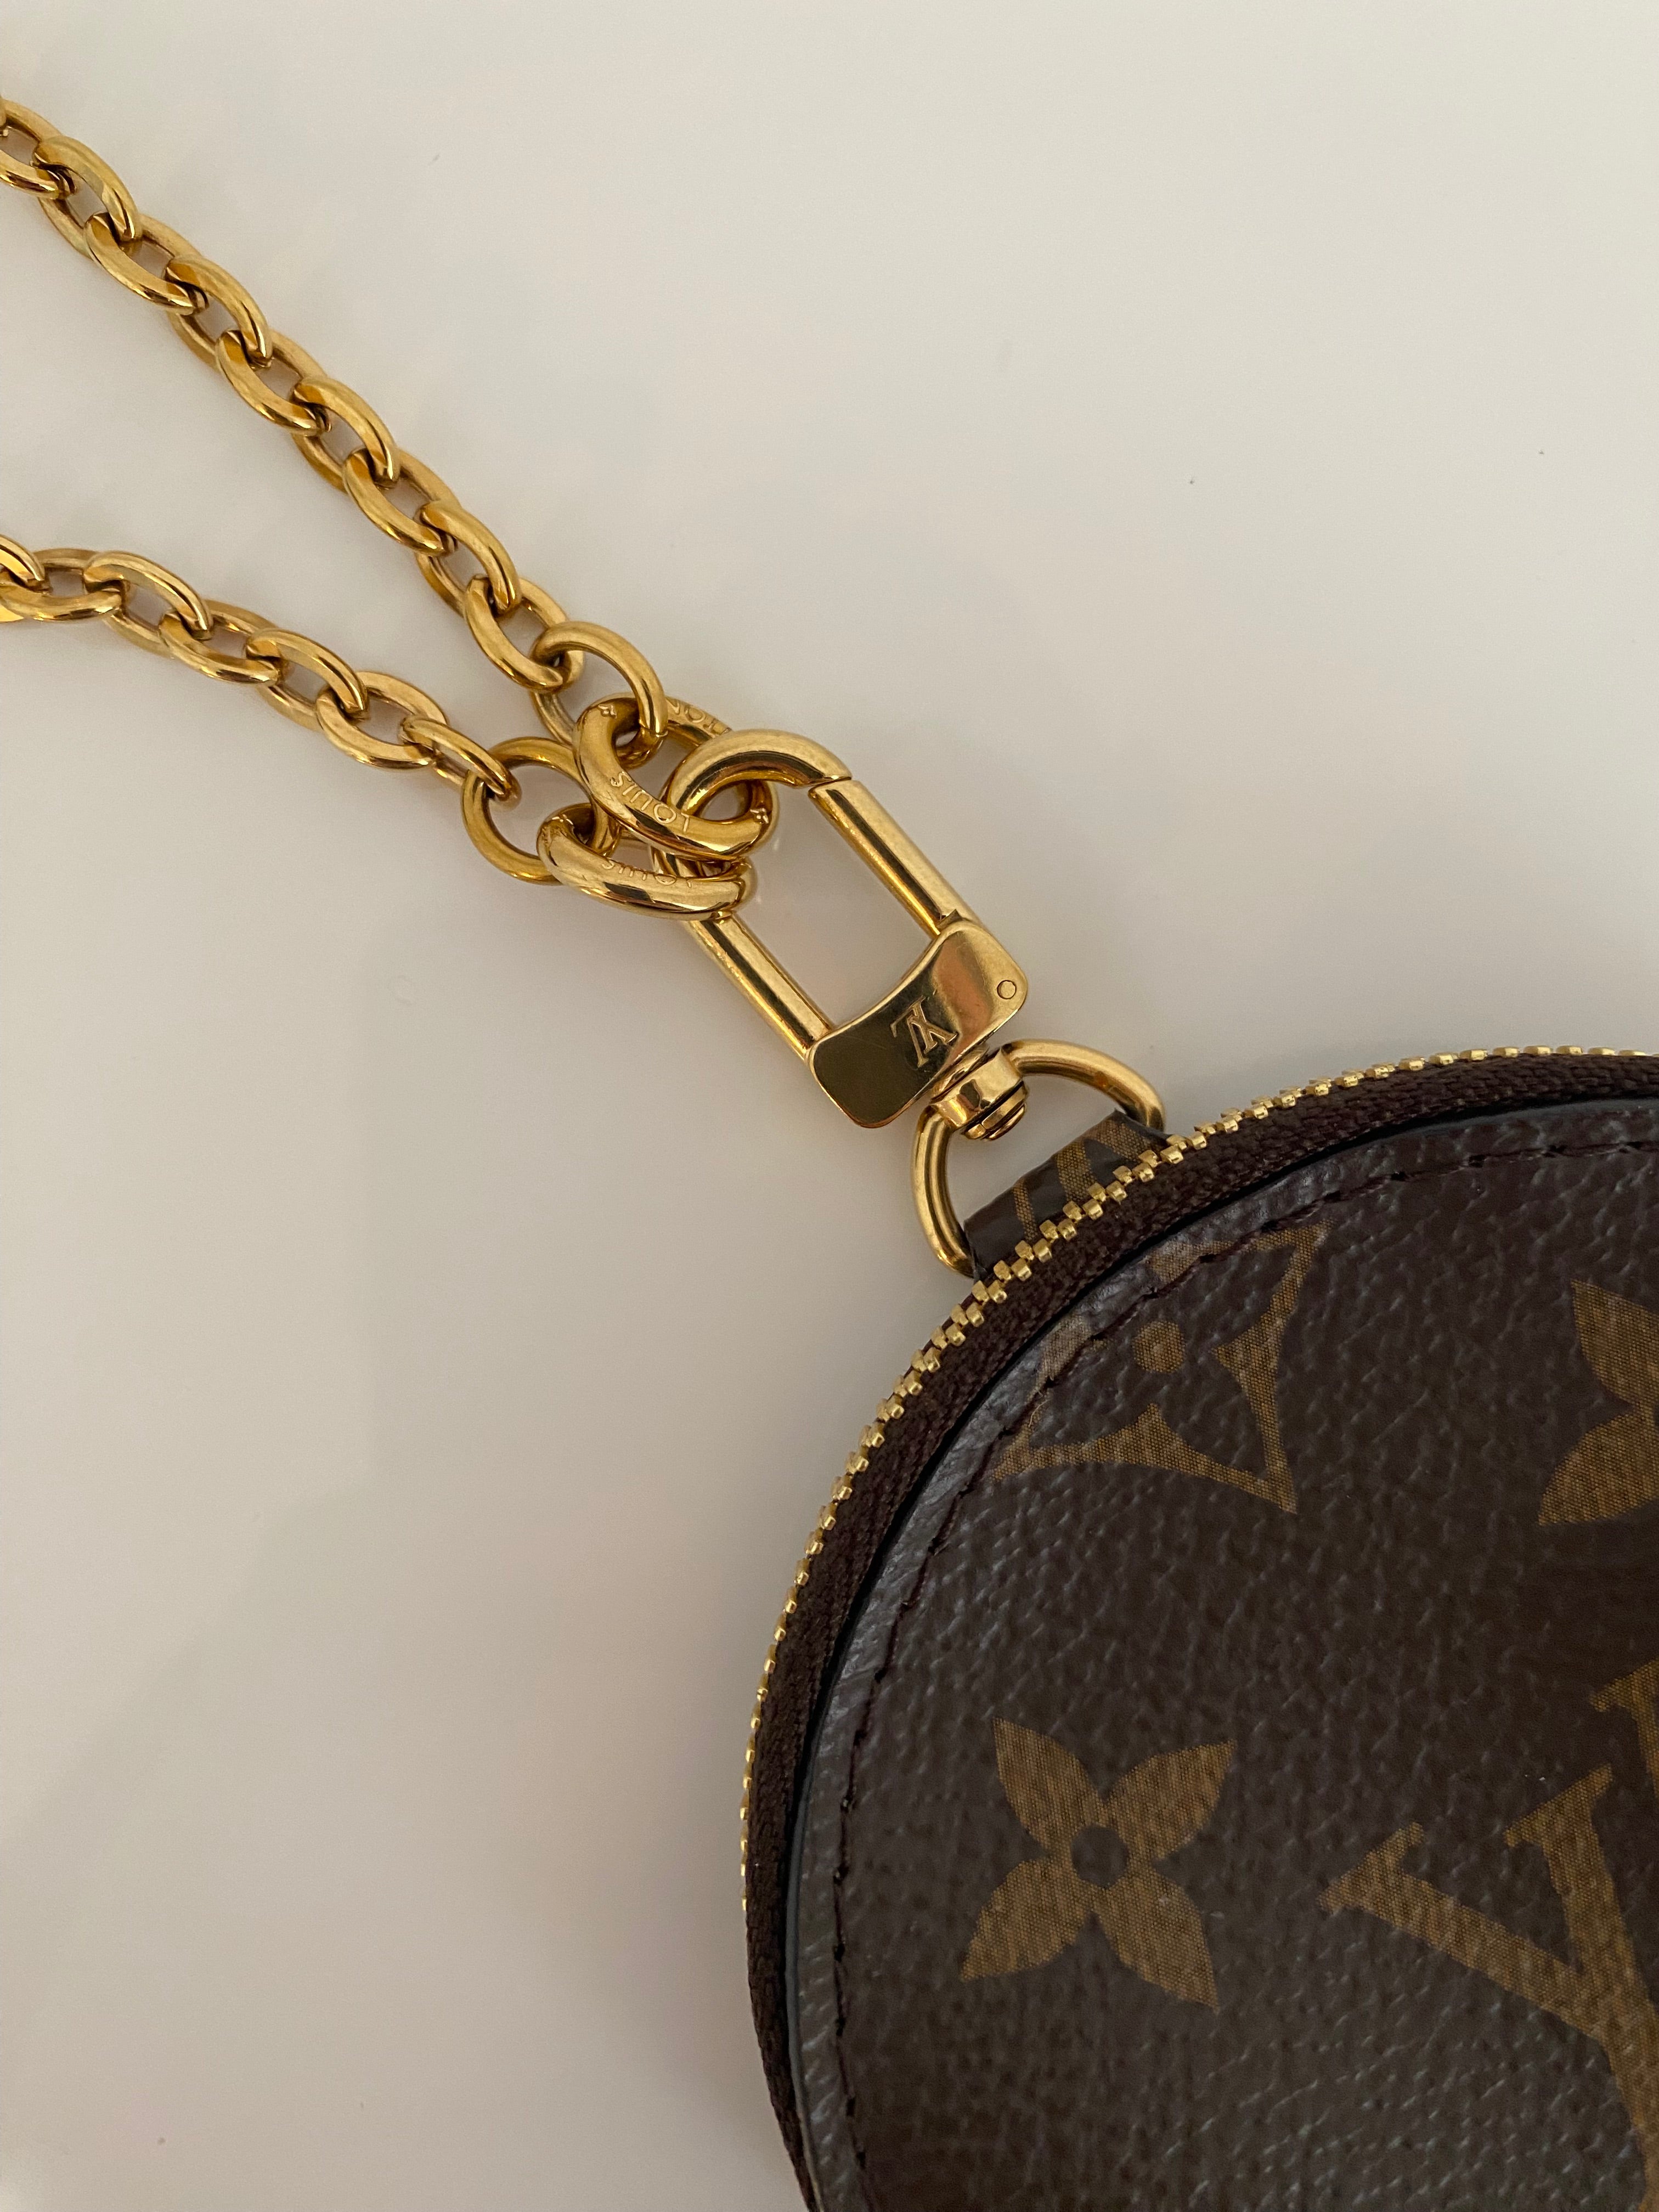 Louis Vuitton Multi Pochette: Fake vs Real Detailed Comparison